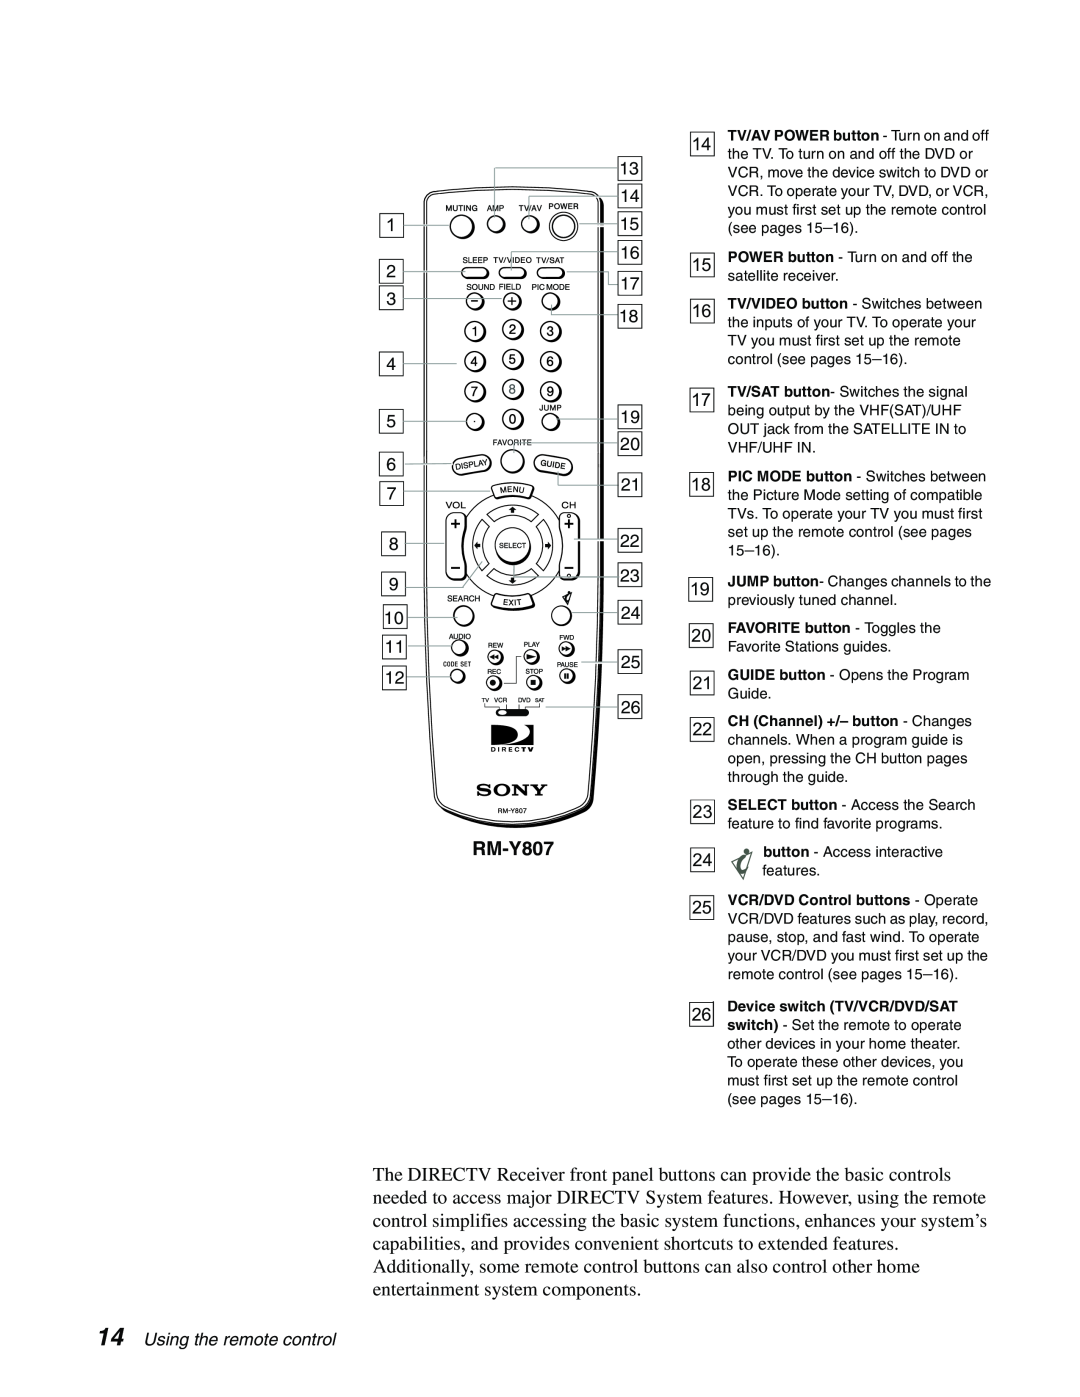 Sony SAT-A65, SAT-B65 manual RM-Y807, Using the remote control 